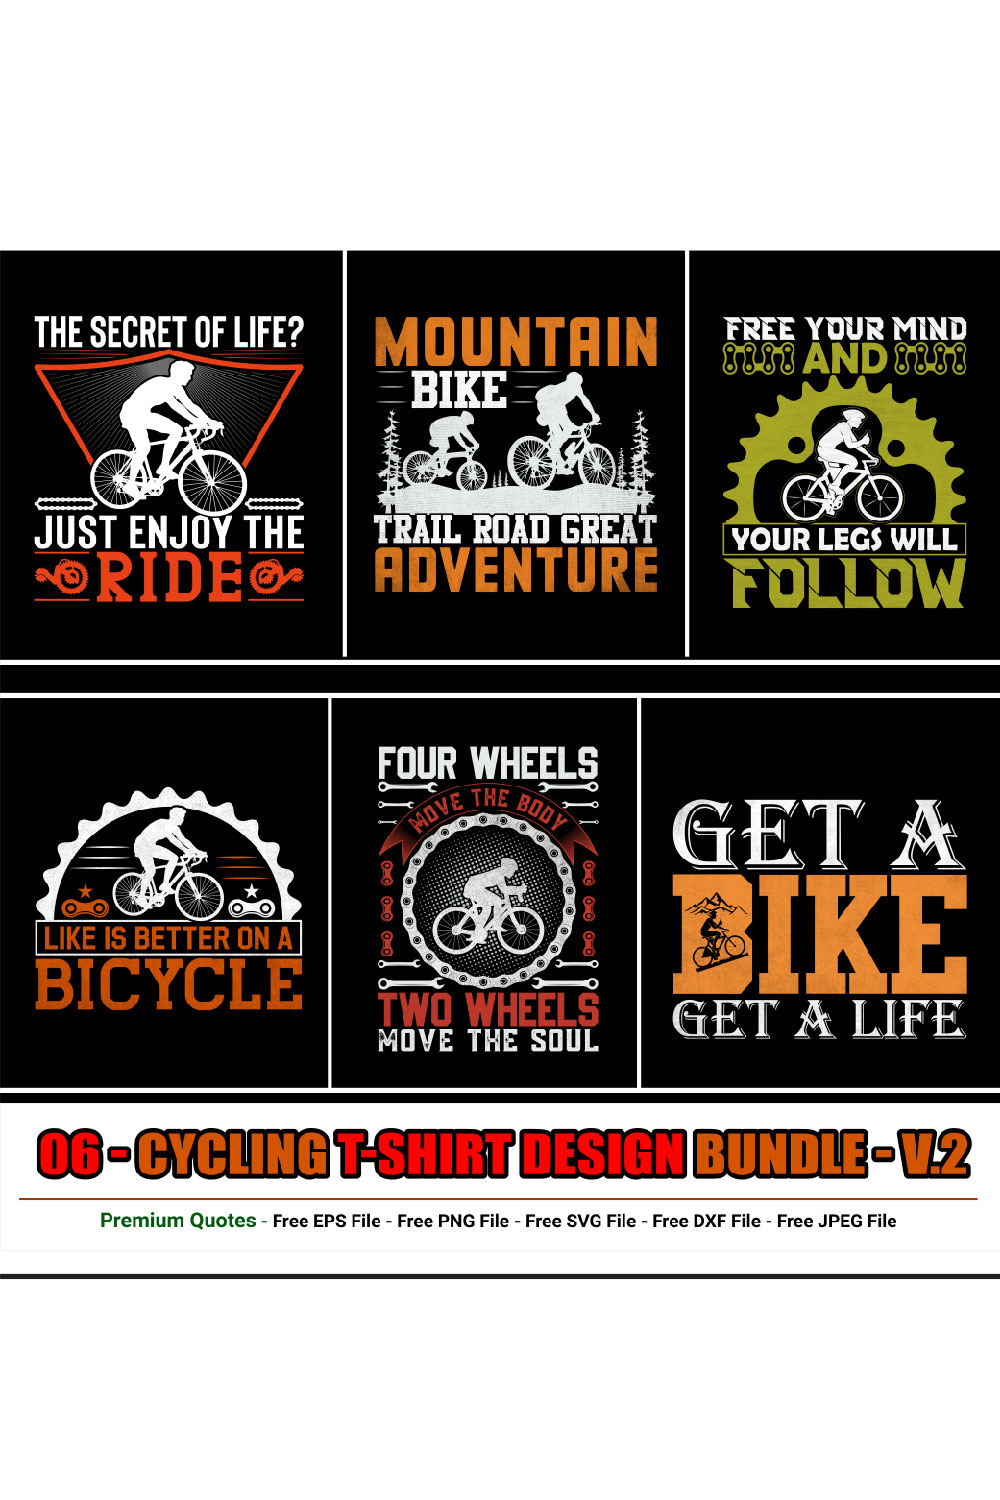 Cycling t-shirt design bundle pinterest preview image.